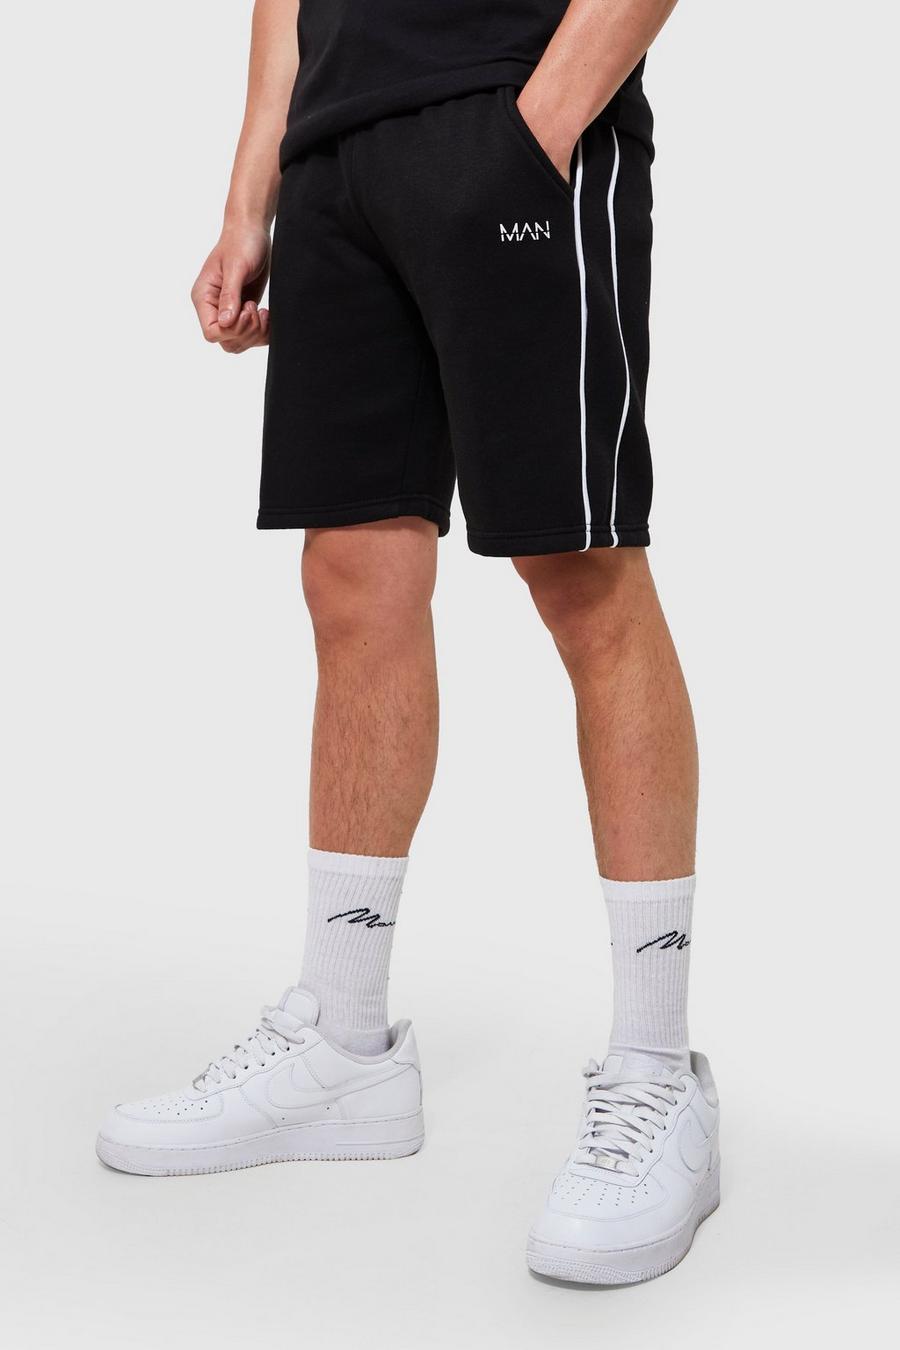 Man Jersey-Shorts mit Paspeln, Black schwarz